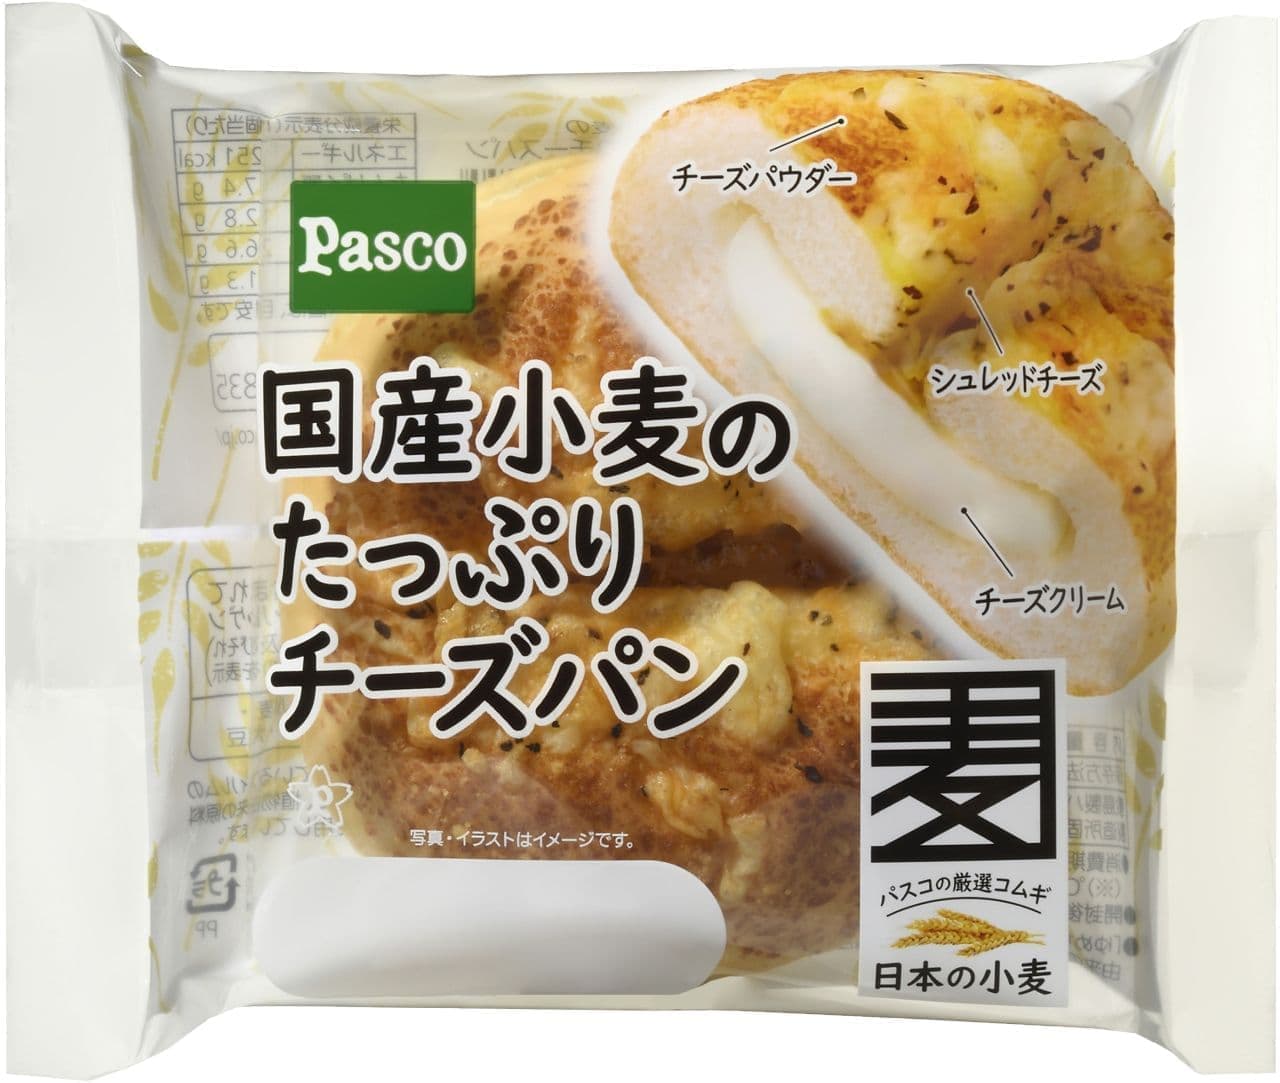 Pasco "Cheese bun with plenty of domestic wheat"